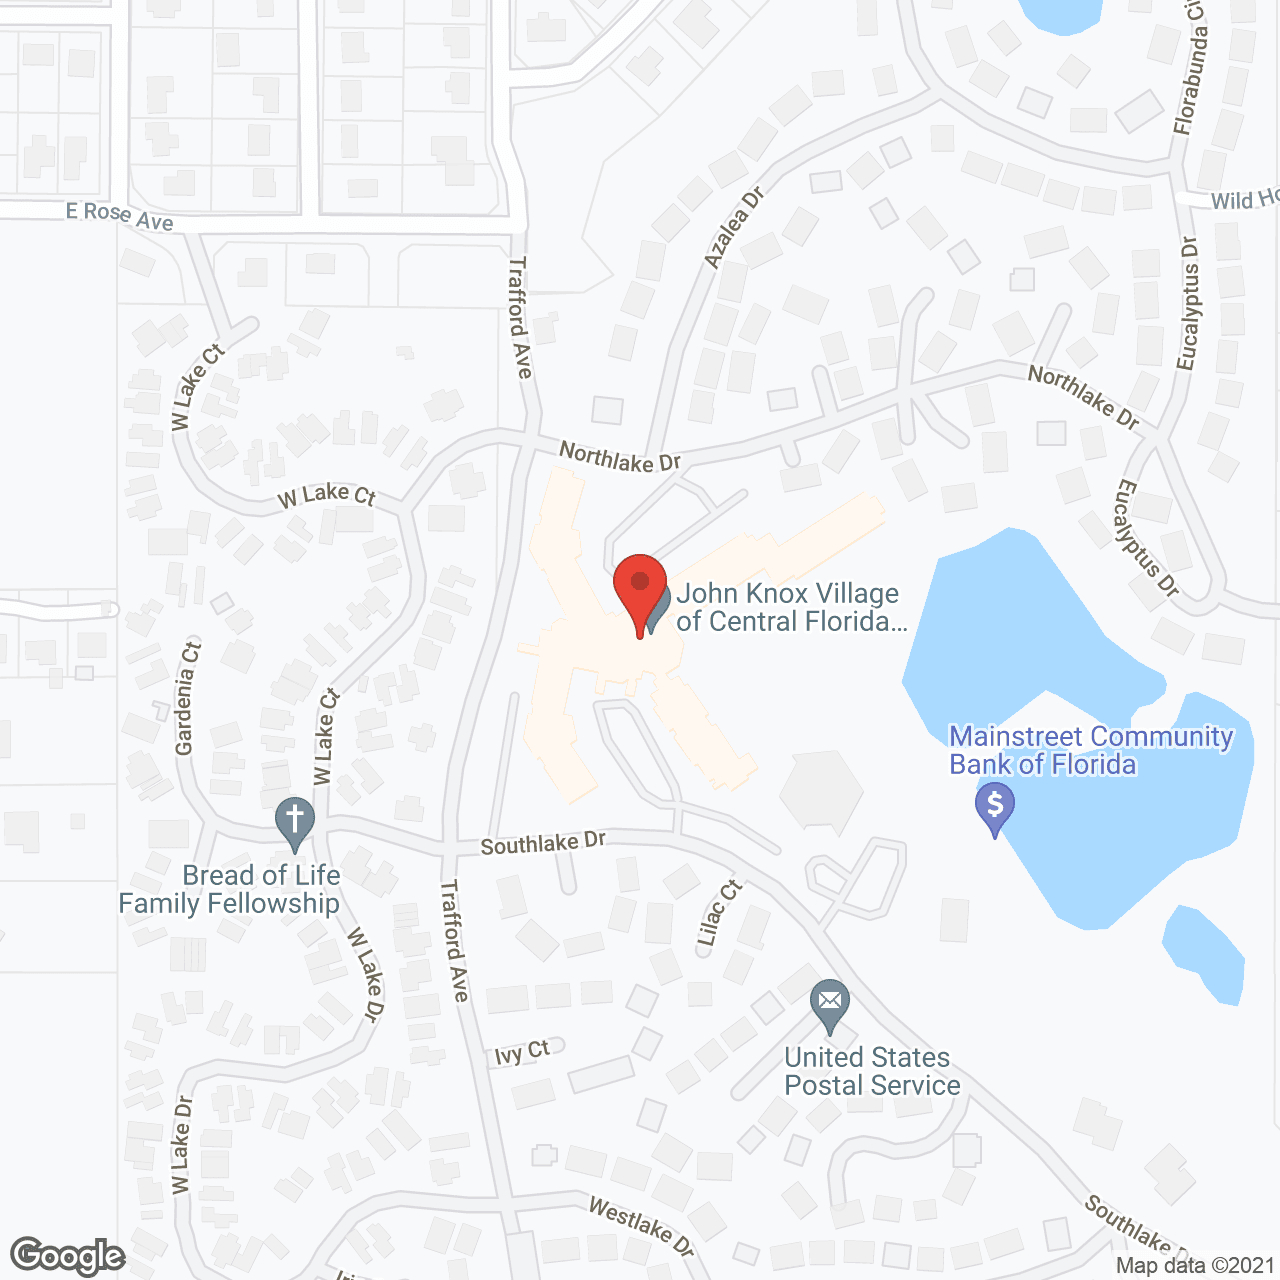 John Knox Village of Central Florida in google map